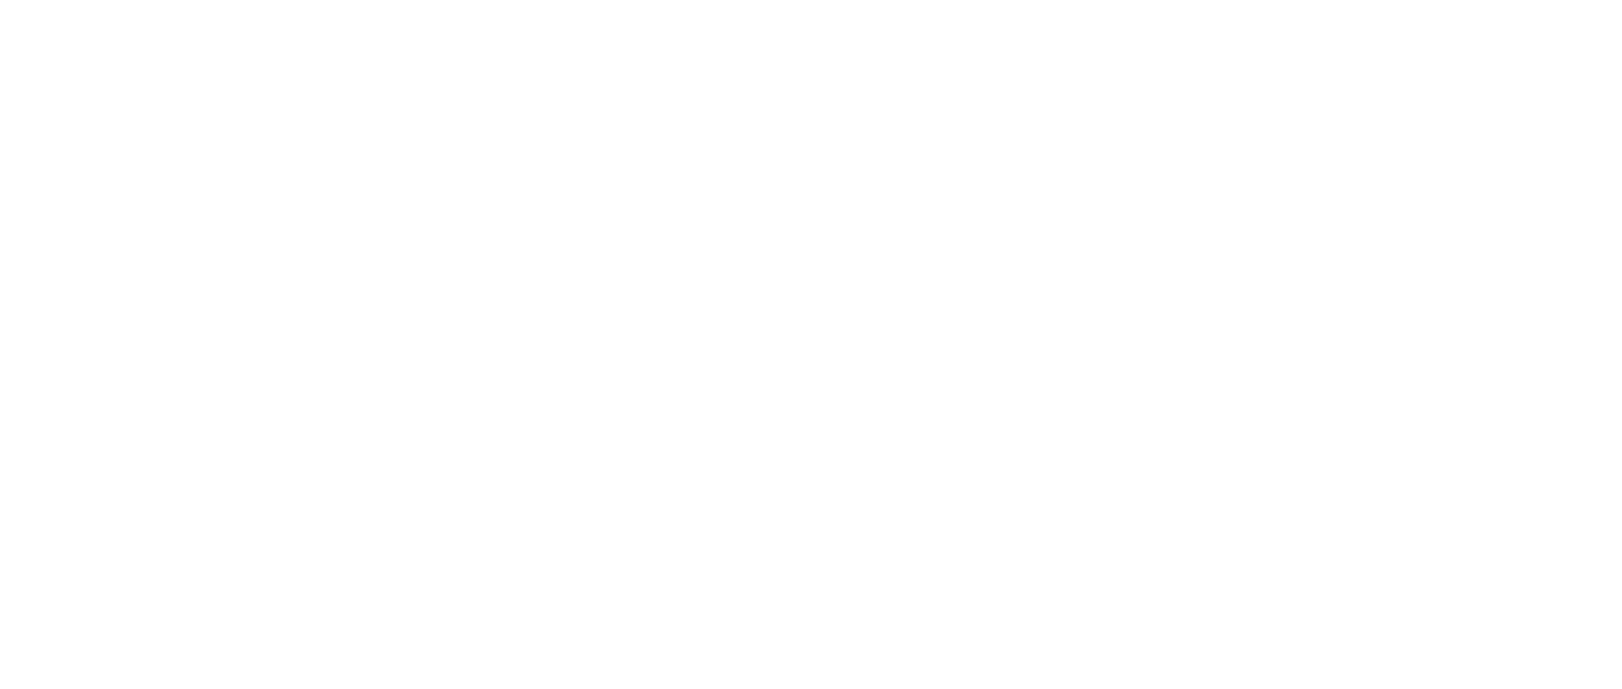 EVgo logo for dark backgrounds (transparent PNG)